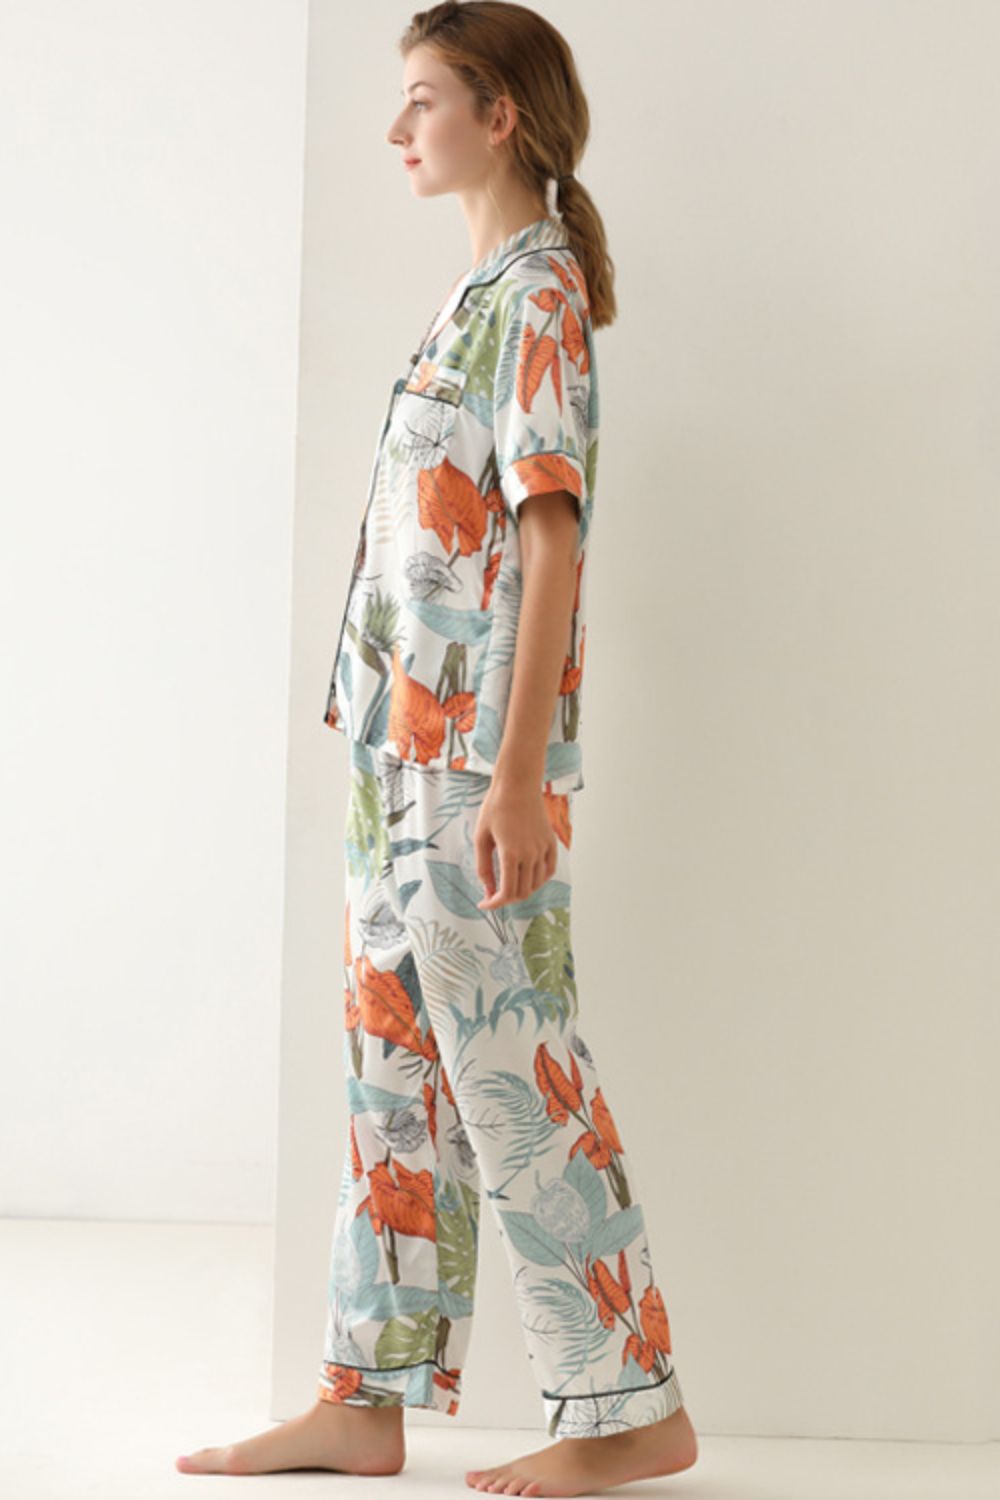 Botanical Print Button-Up Top and Pants Pajama Set - Apparel & Accessories Girl Code